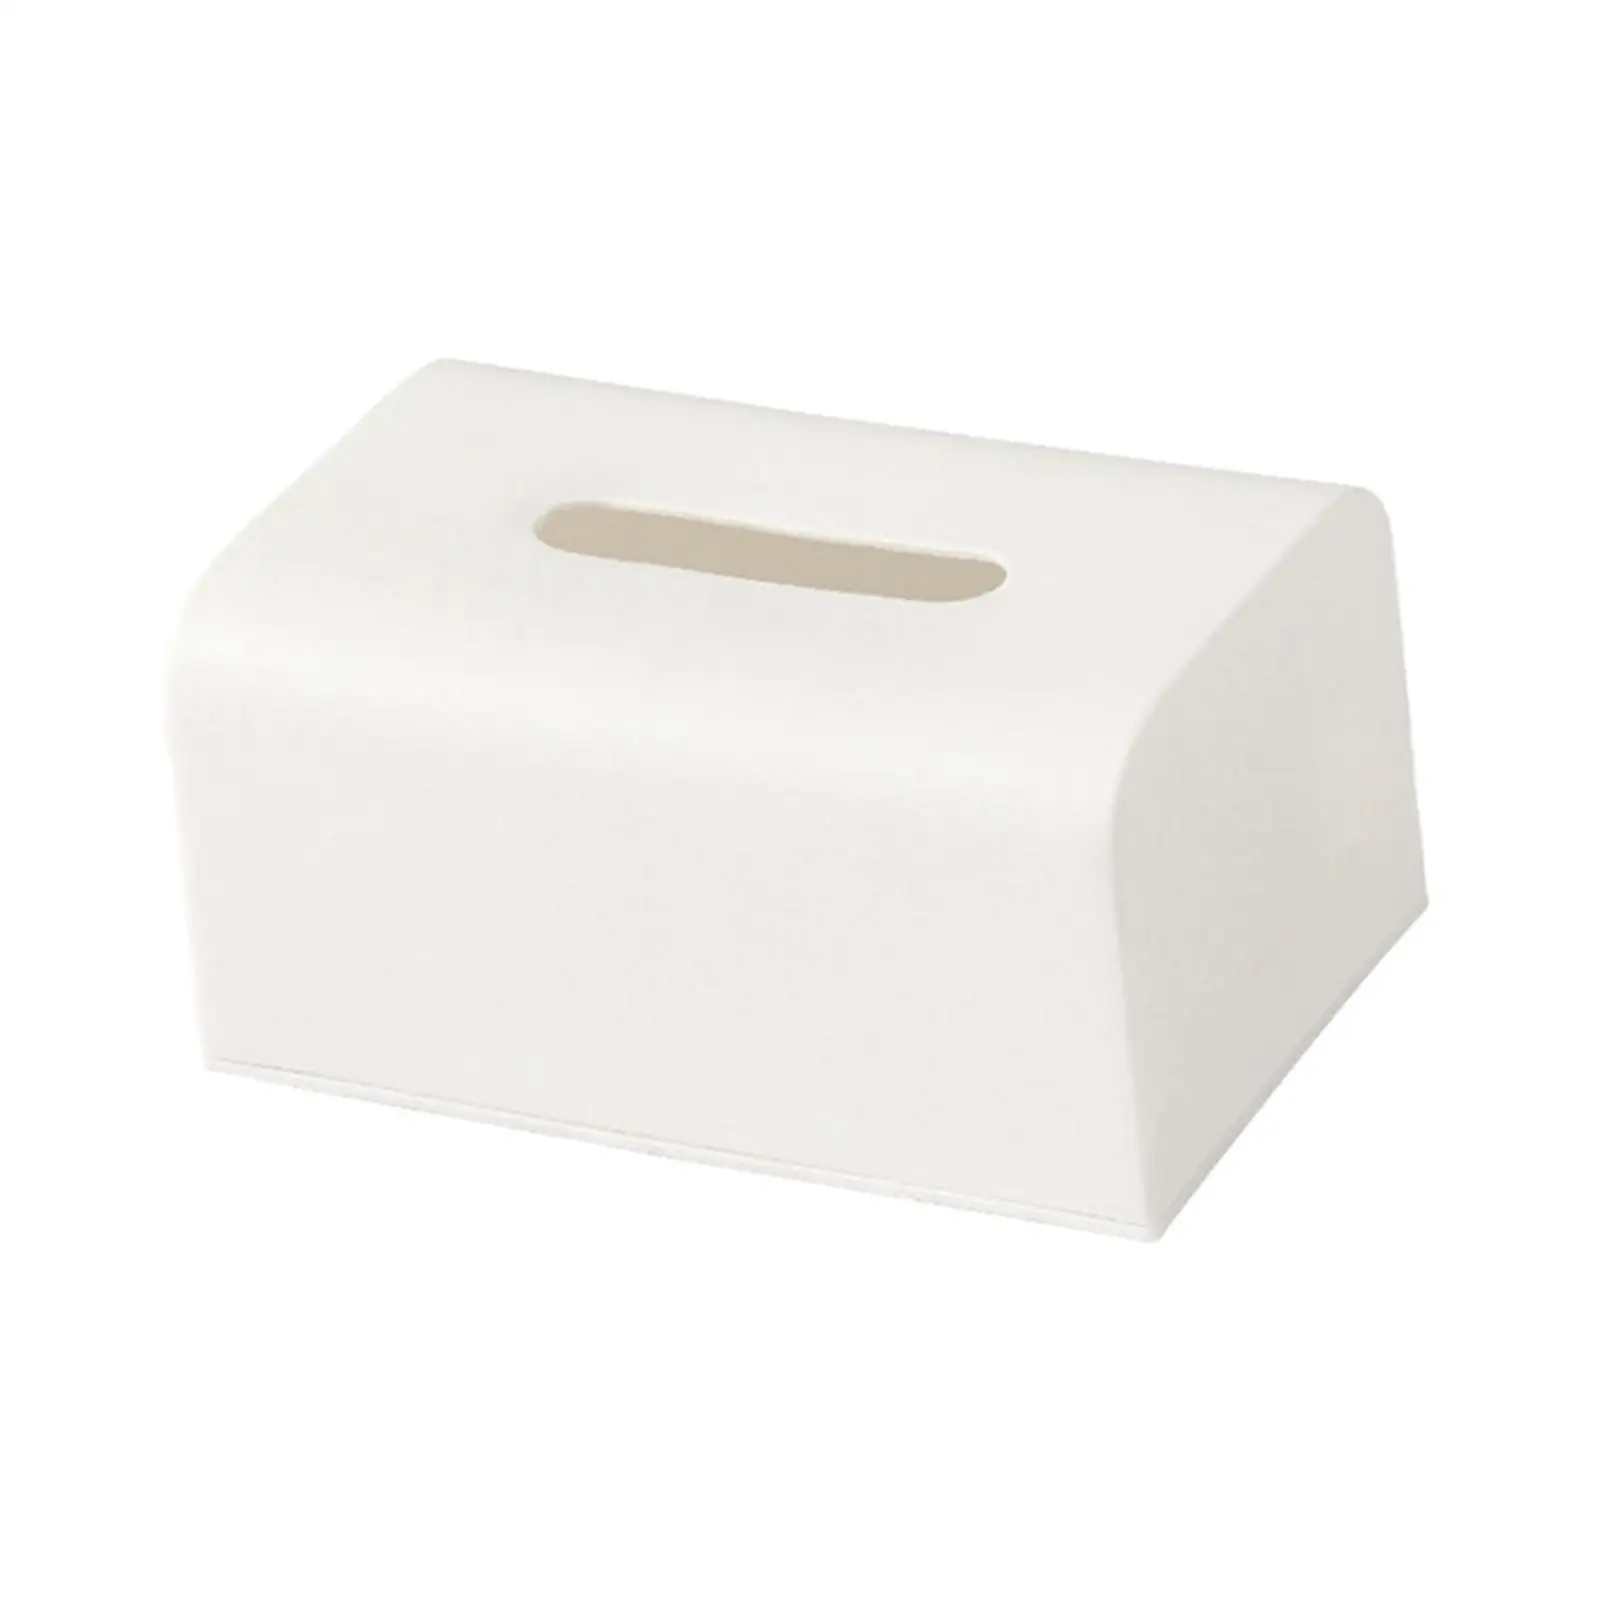 Tissue Dispenser Box Removable Tissue Box Cover for Hotel Restaurant Kitchen